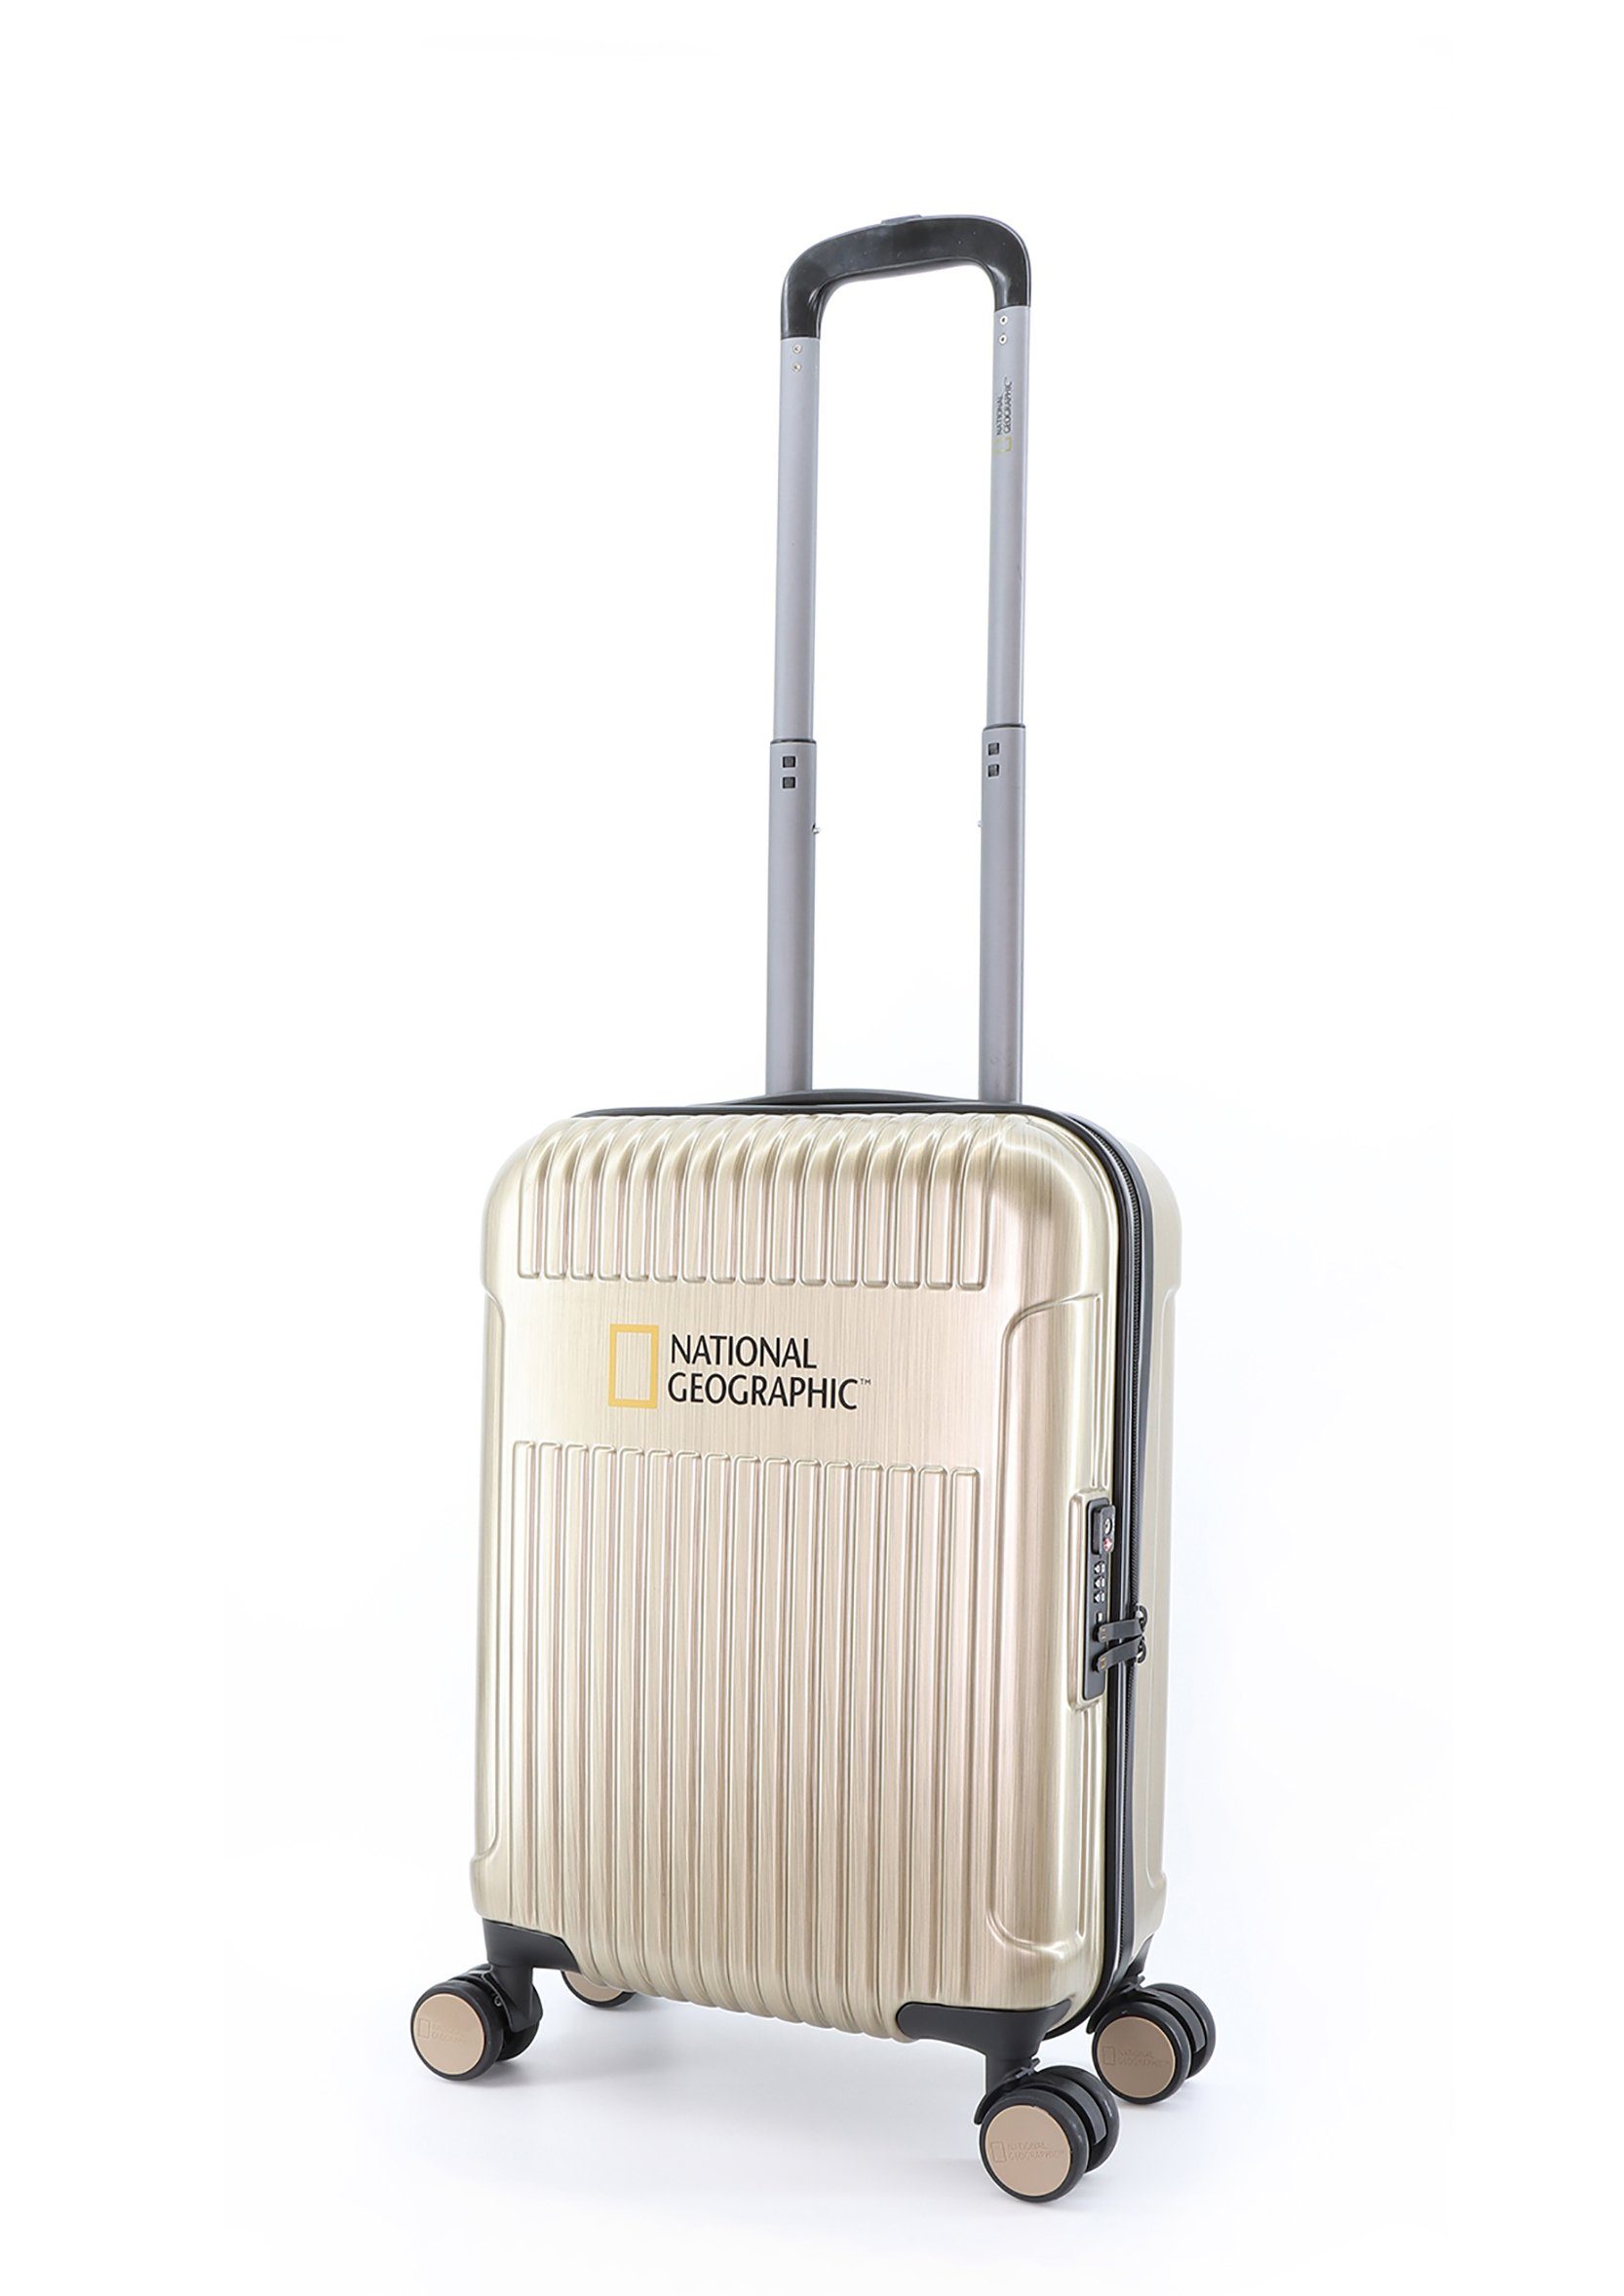 NATIONAL GEOGRAPHIC Koffer Transit, sicherem mit TSA-Zahlenschloss